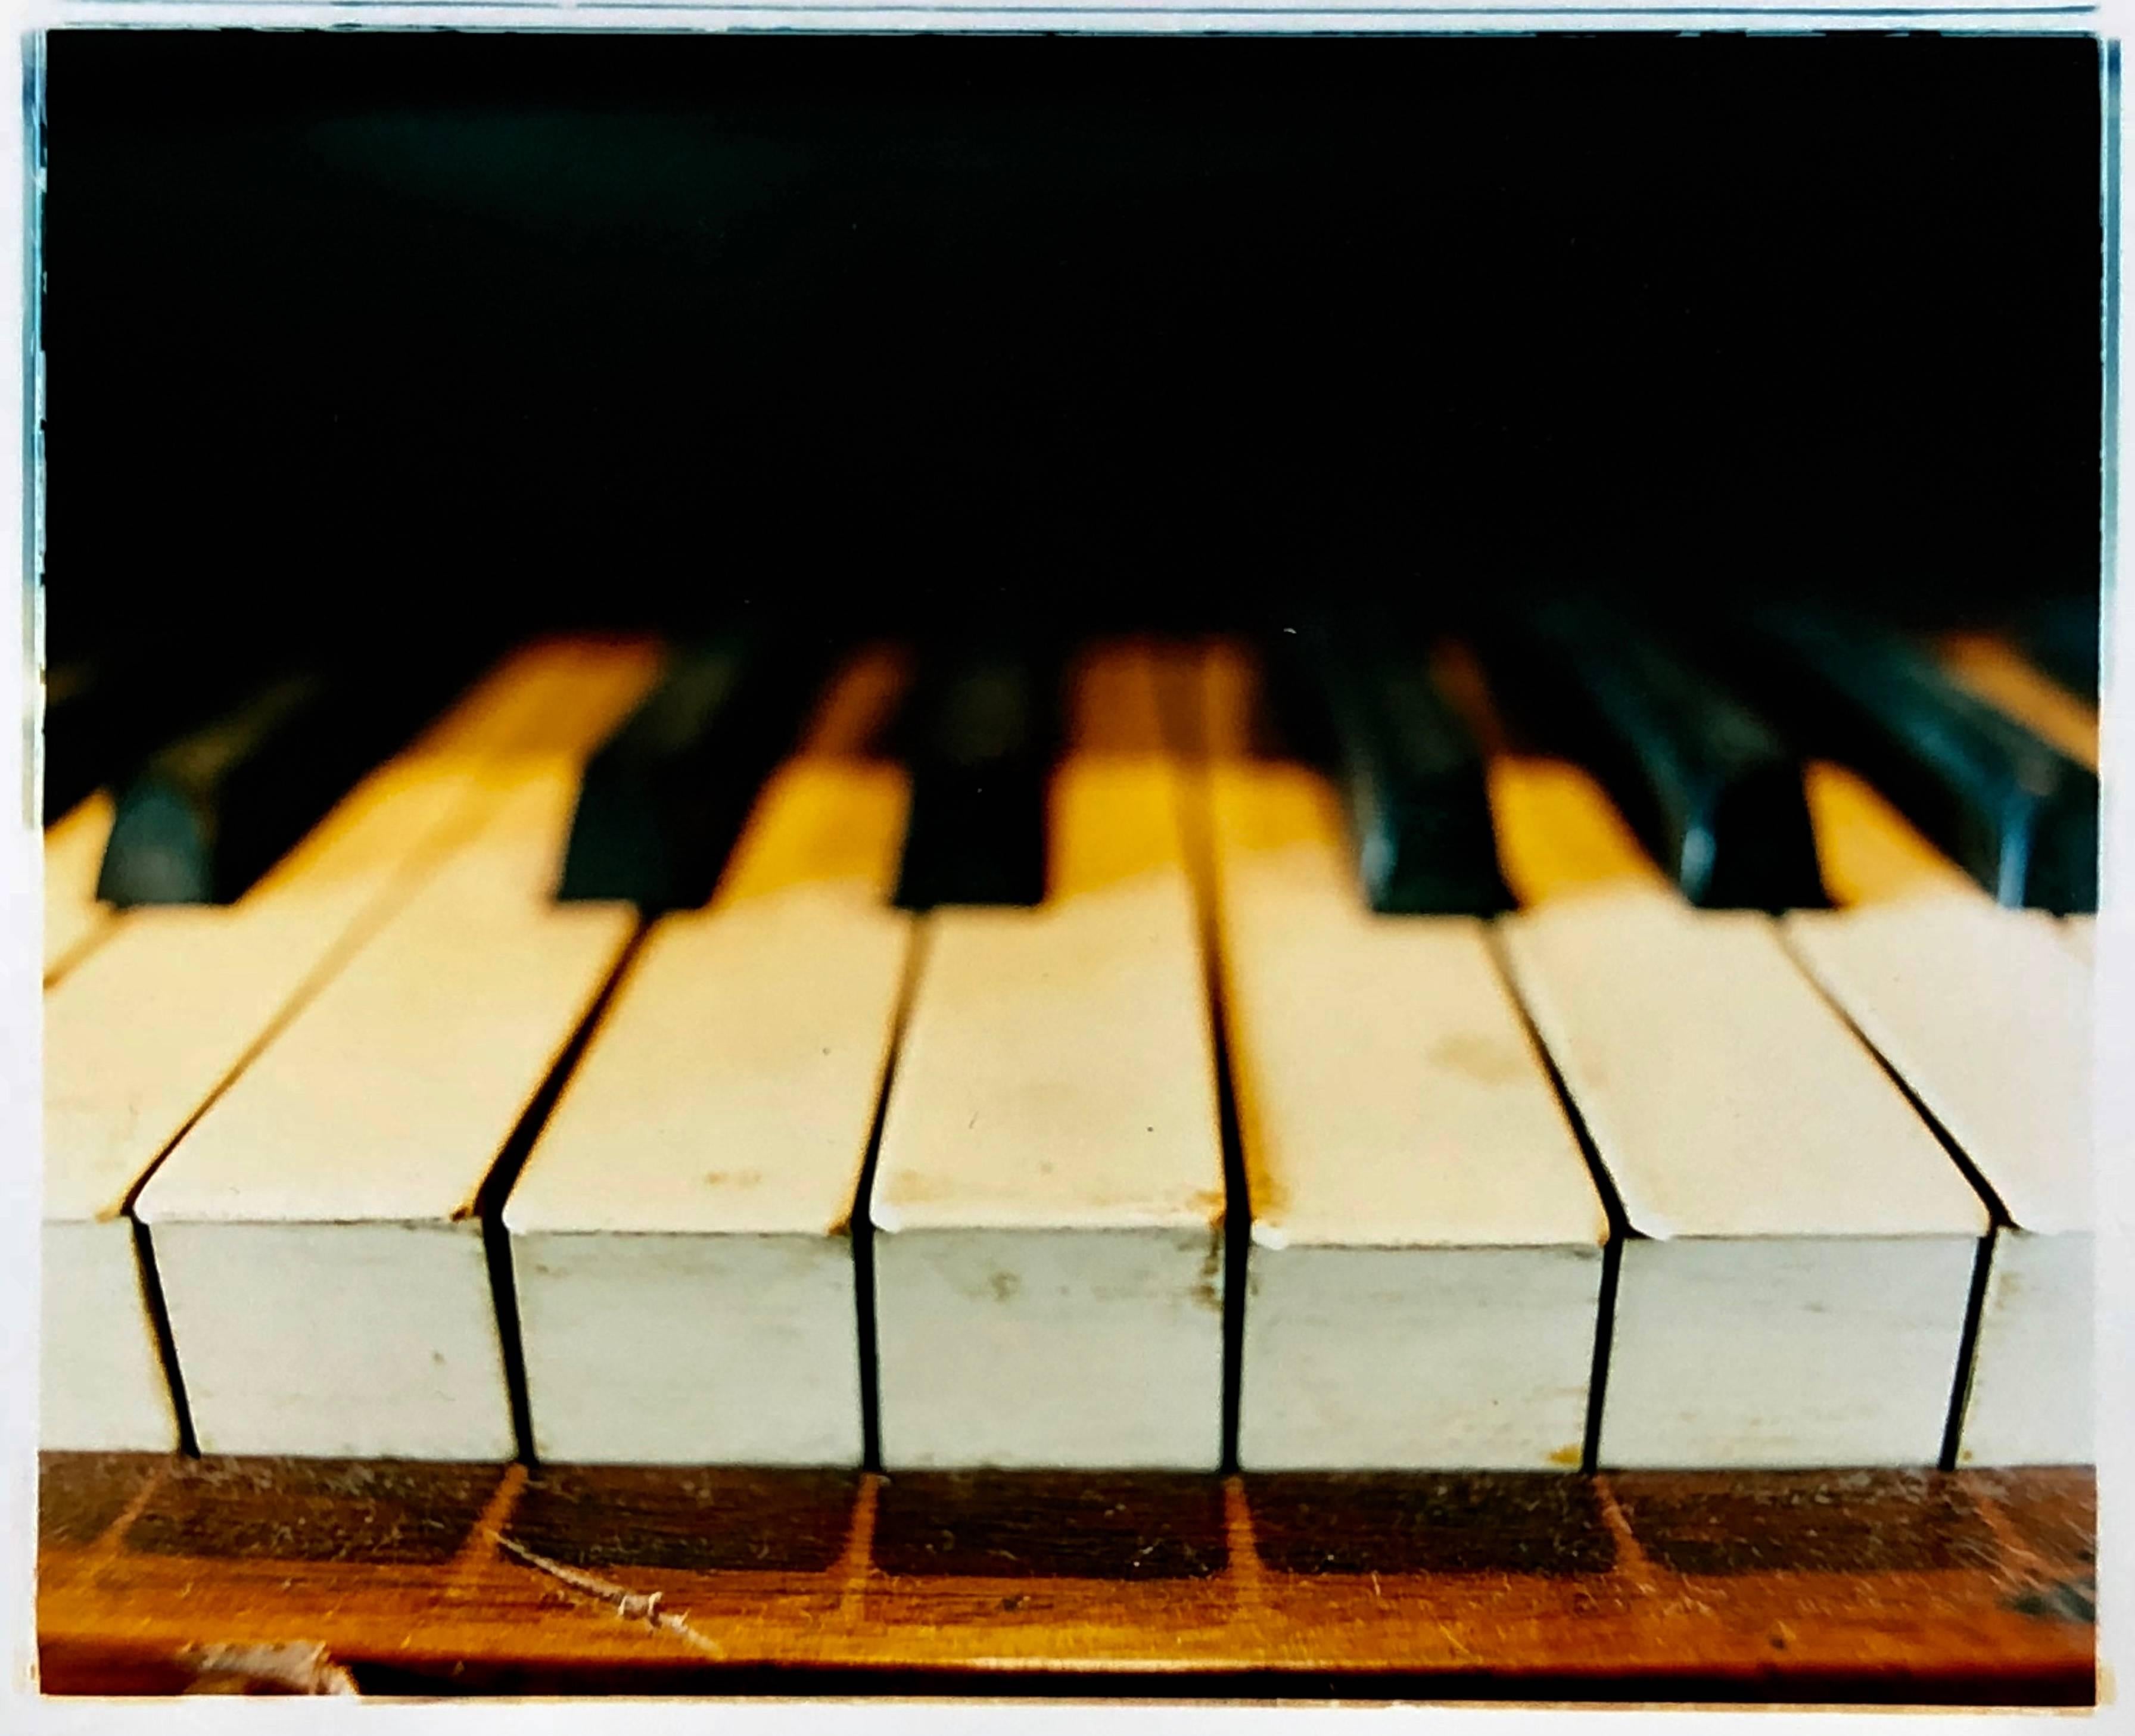 Piano Keys, Stockton-on-Tees - Music color photography